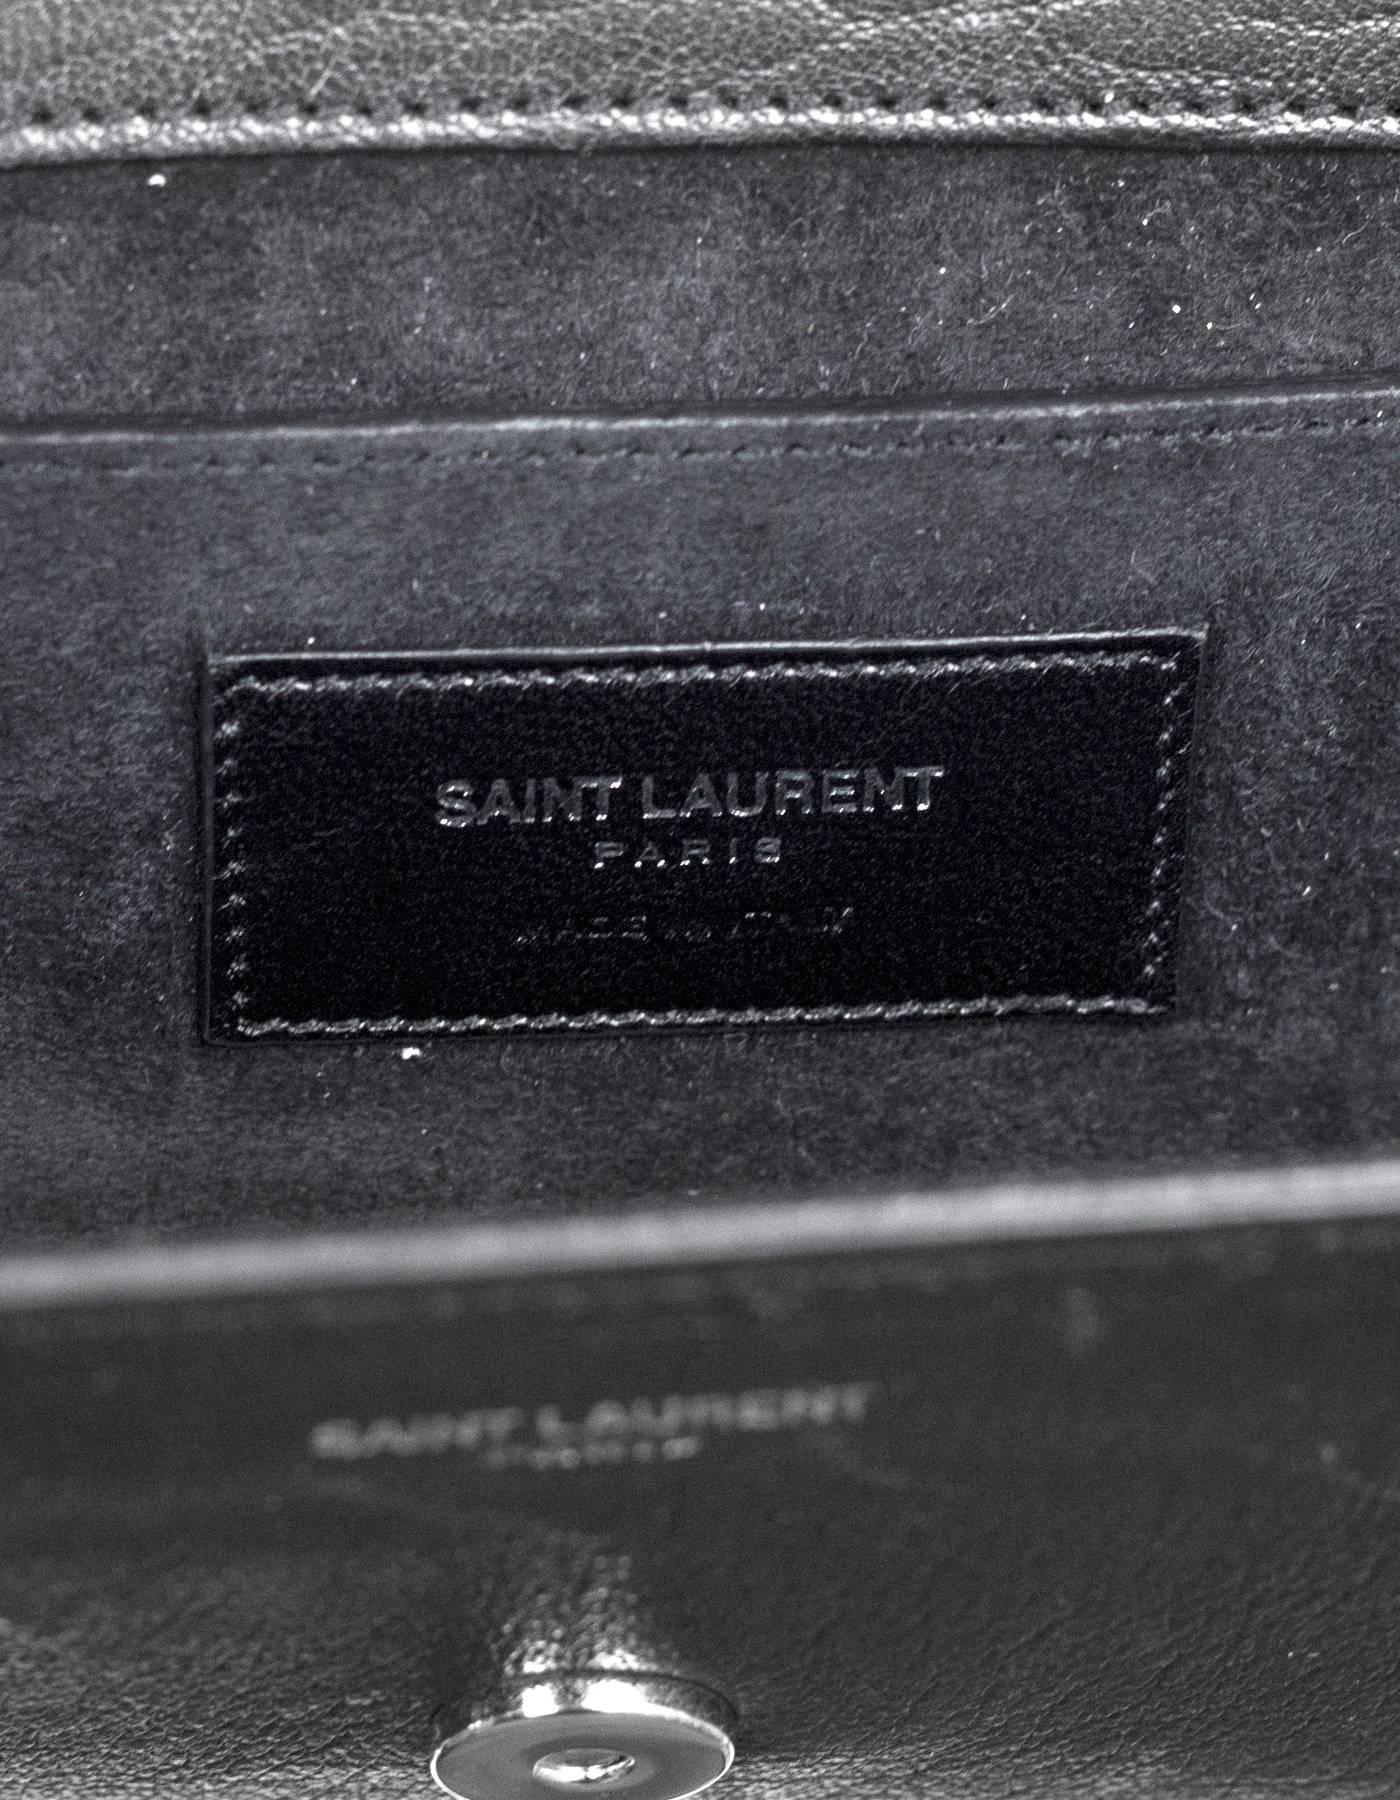 Saint Laurent Punk Safety Pin Black Leather Clutch Bag rt. $1, 450 2